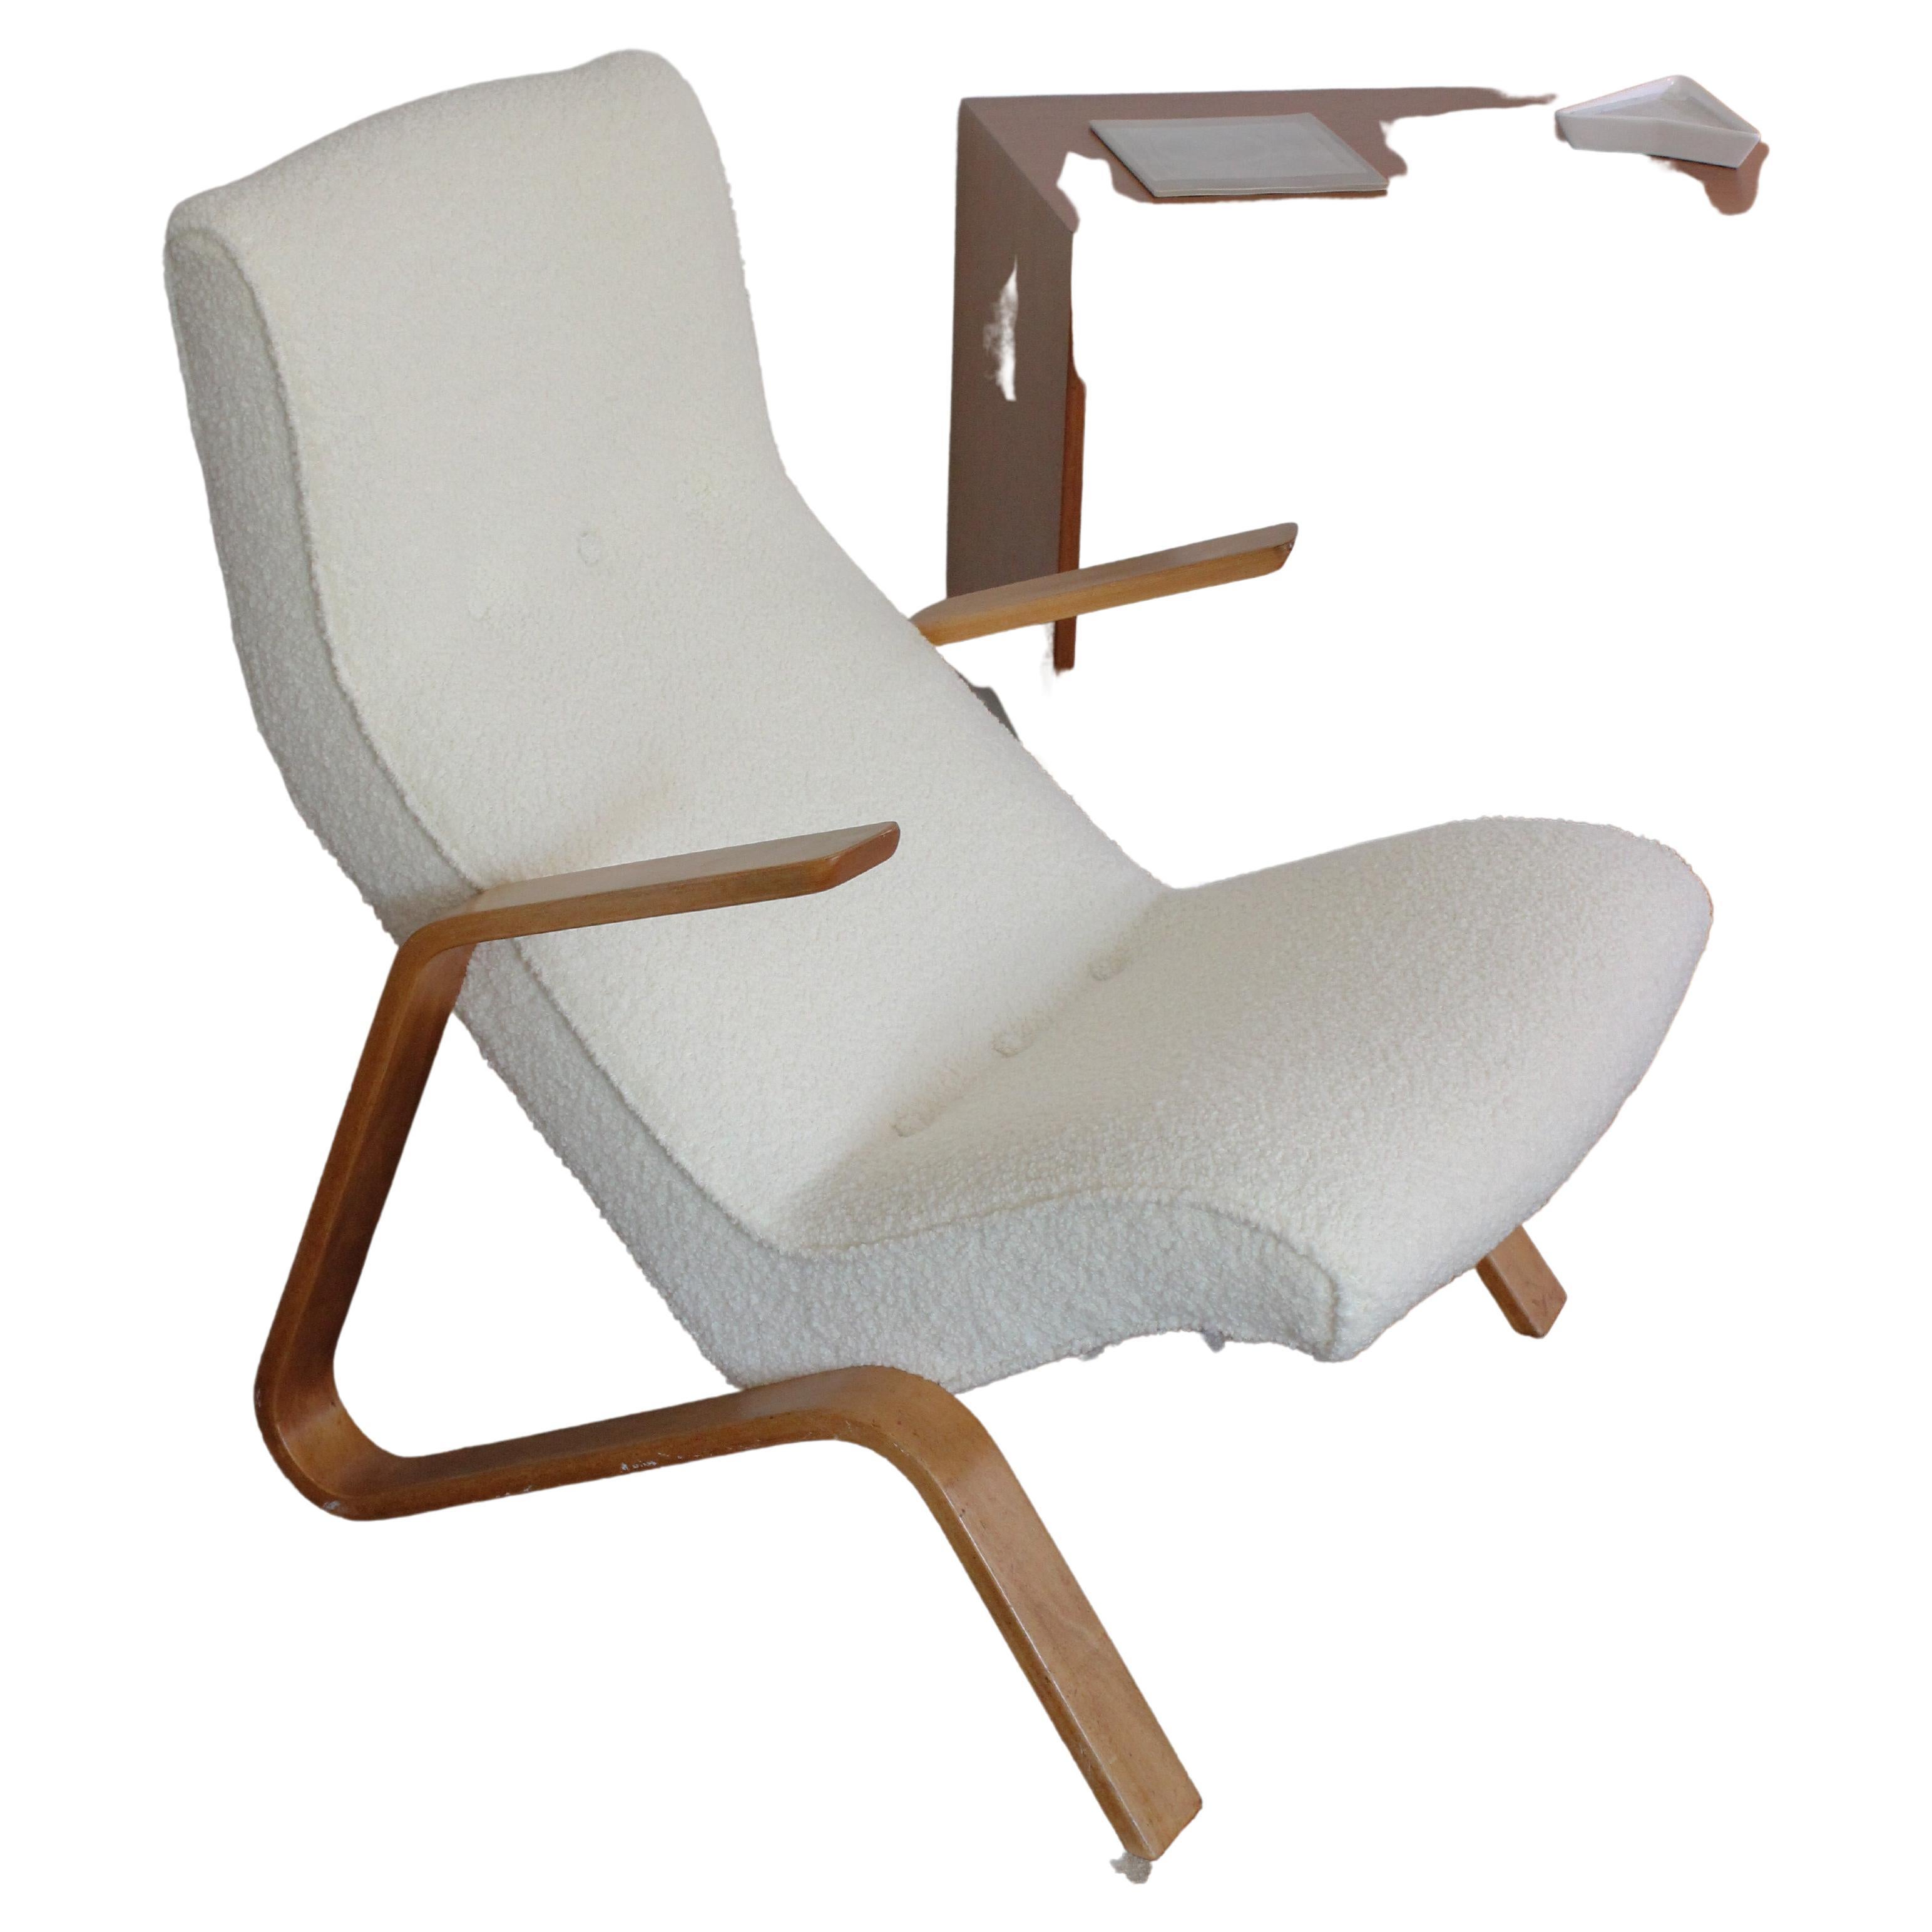 Eero Saarinen 'Finnish-American, 1910-1961' "Grasshopper" Chair, Knoll Original For Sale